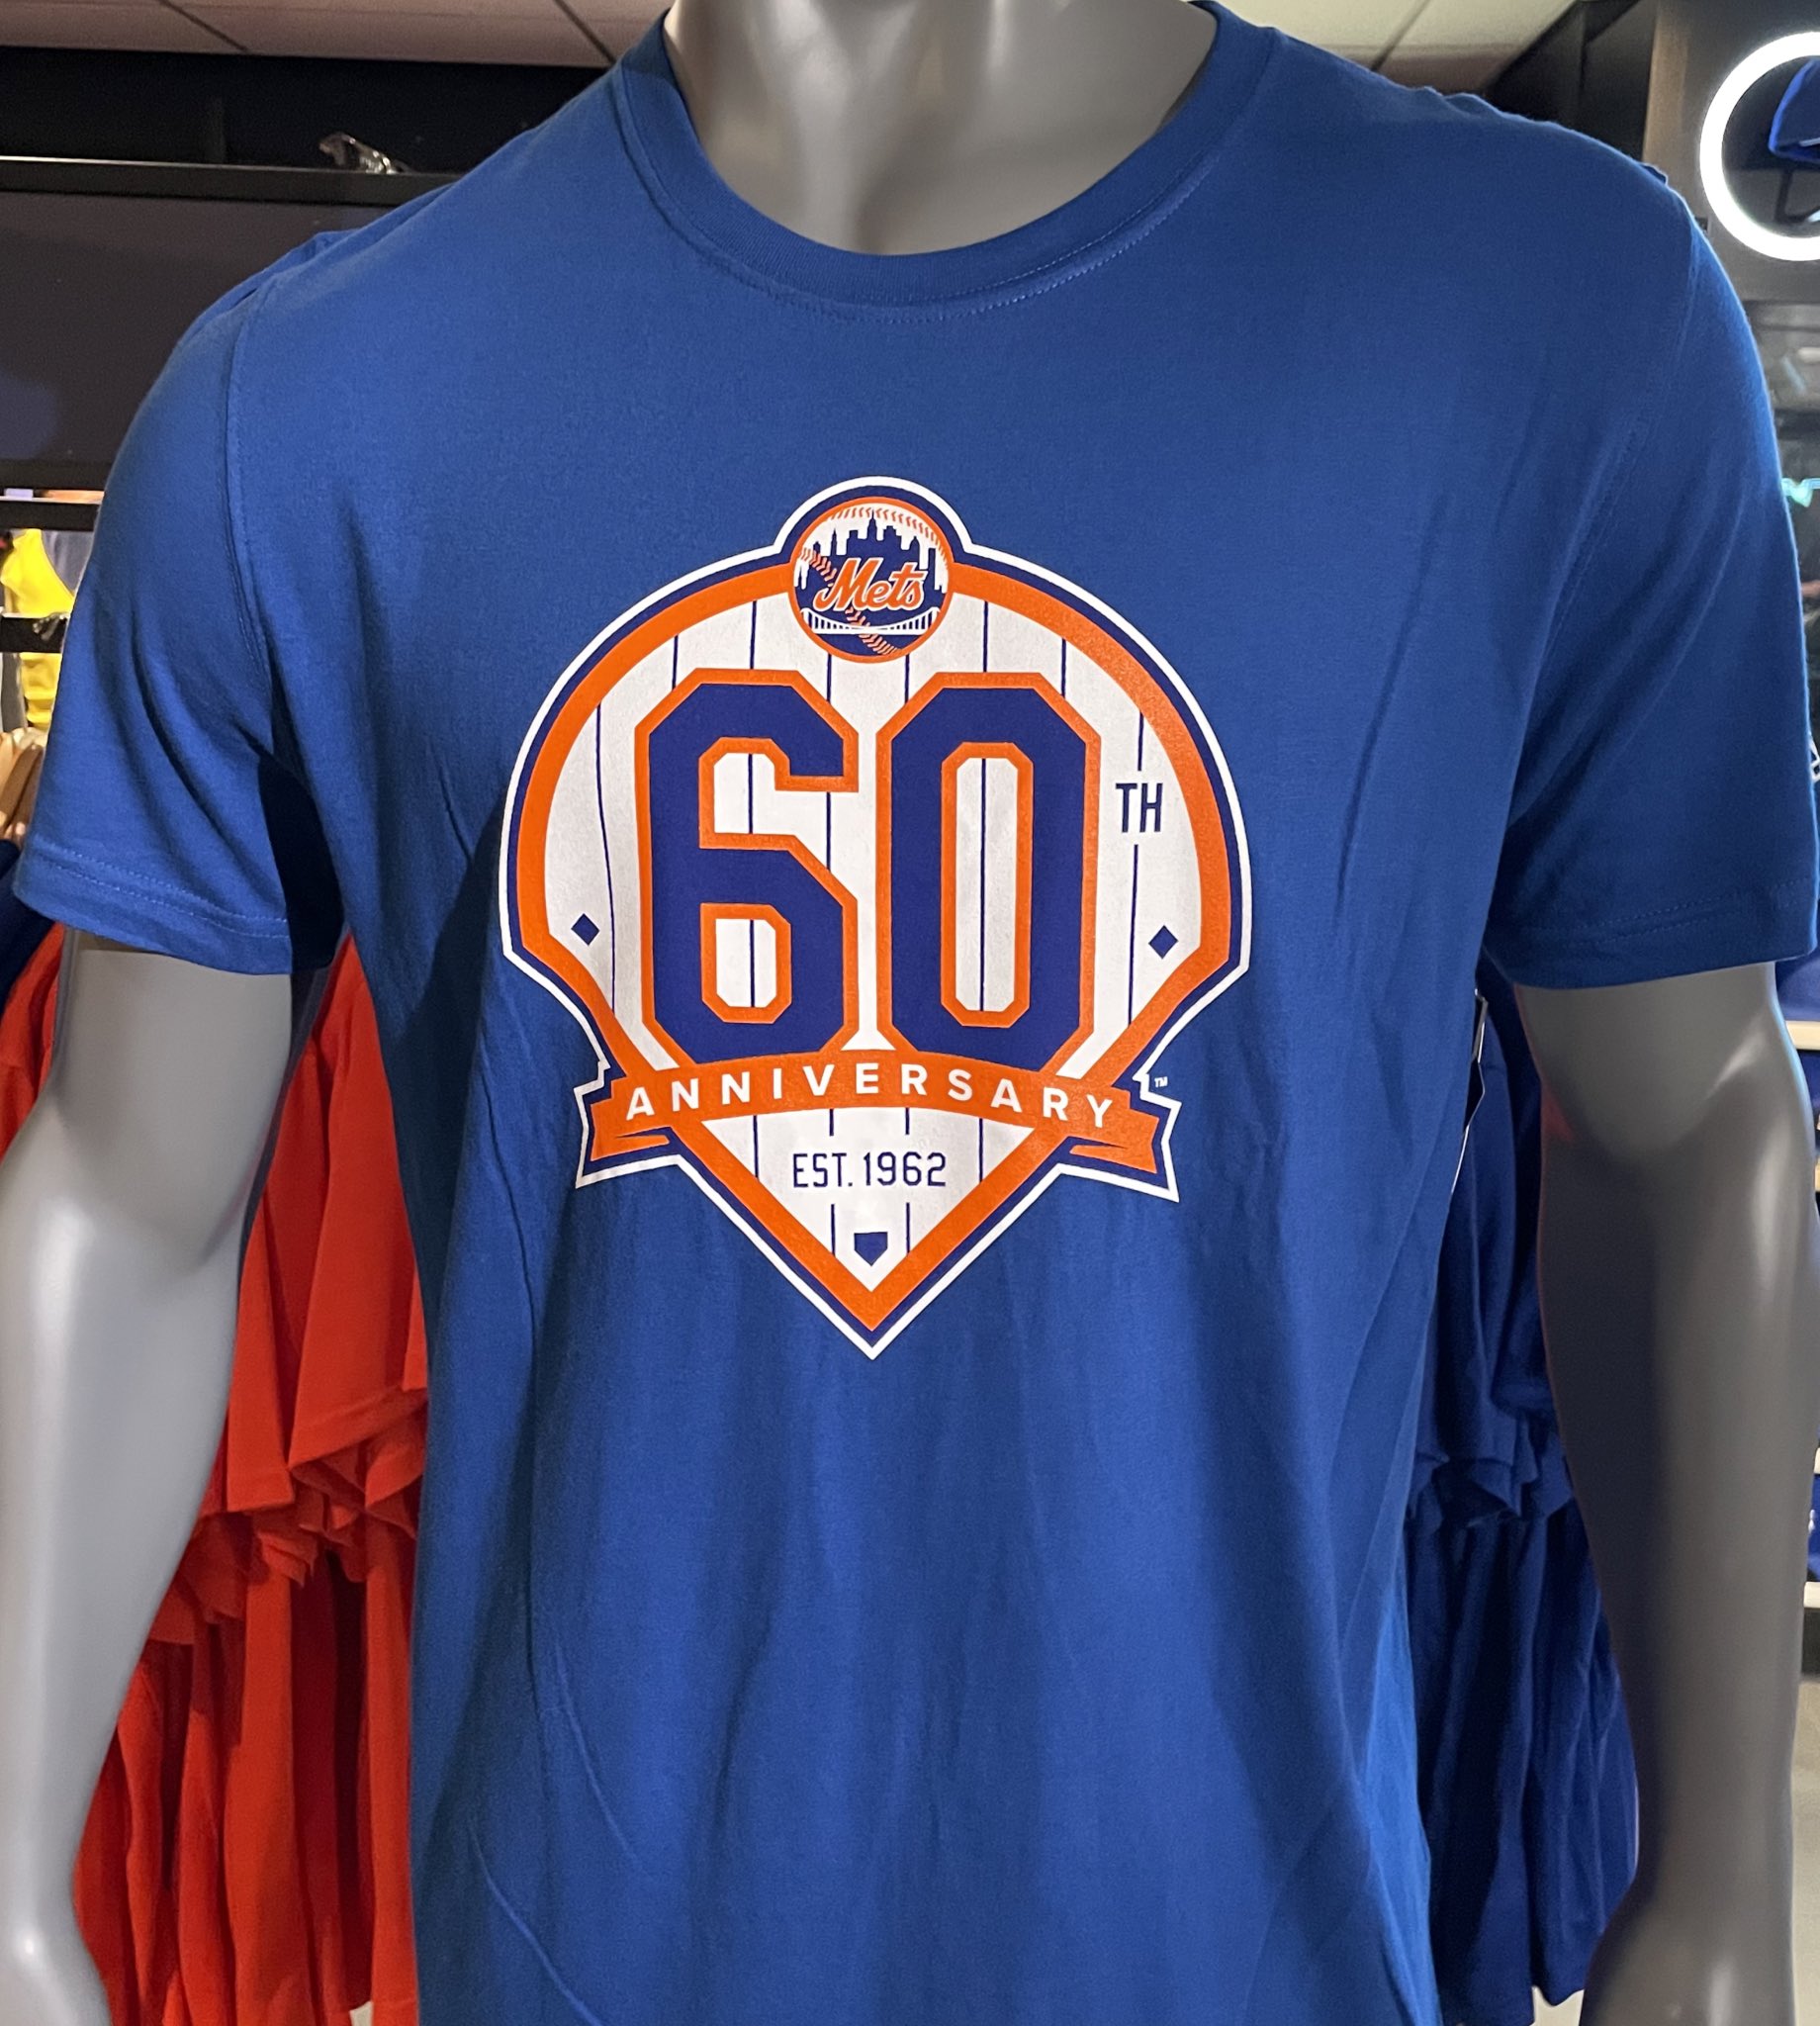 Mets Team Store on X: 60th Anniversary! @Mets #LGM #NYM #Mets